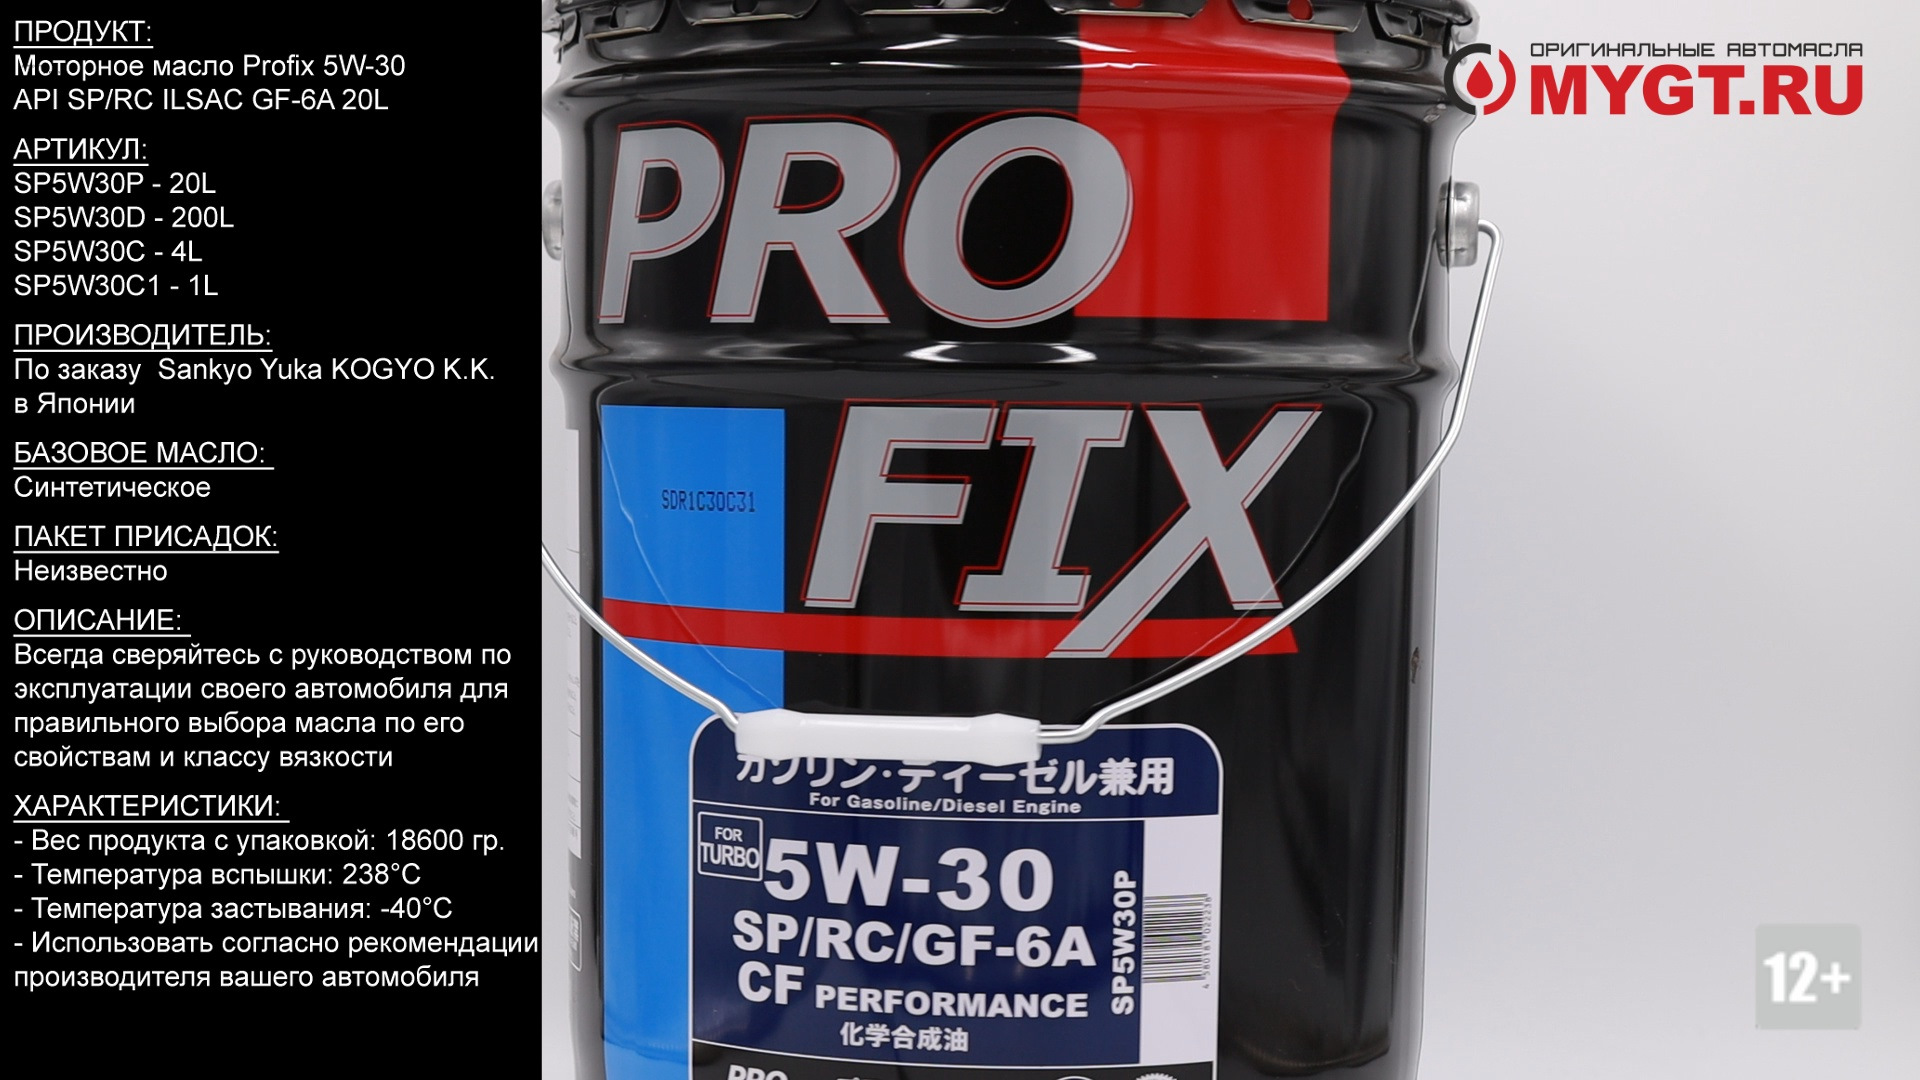 Profix 5w40. PROFIX SP/gf-6a 5w30. PROFIX 5w30 gf-6a. PROFIX 5w30 SP. Sp5w30c1 PROFIX.